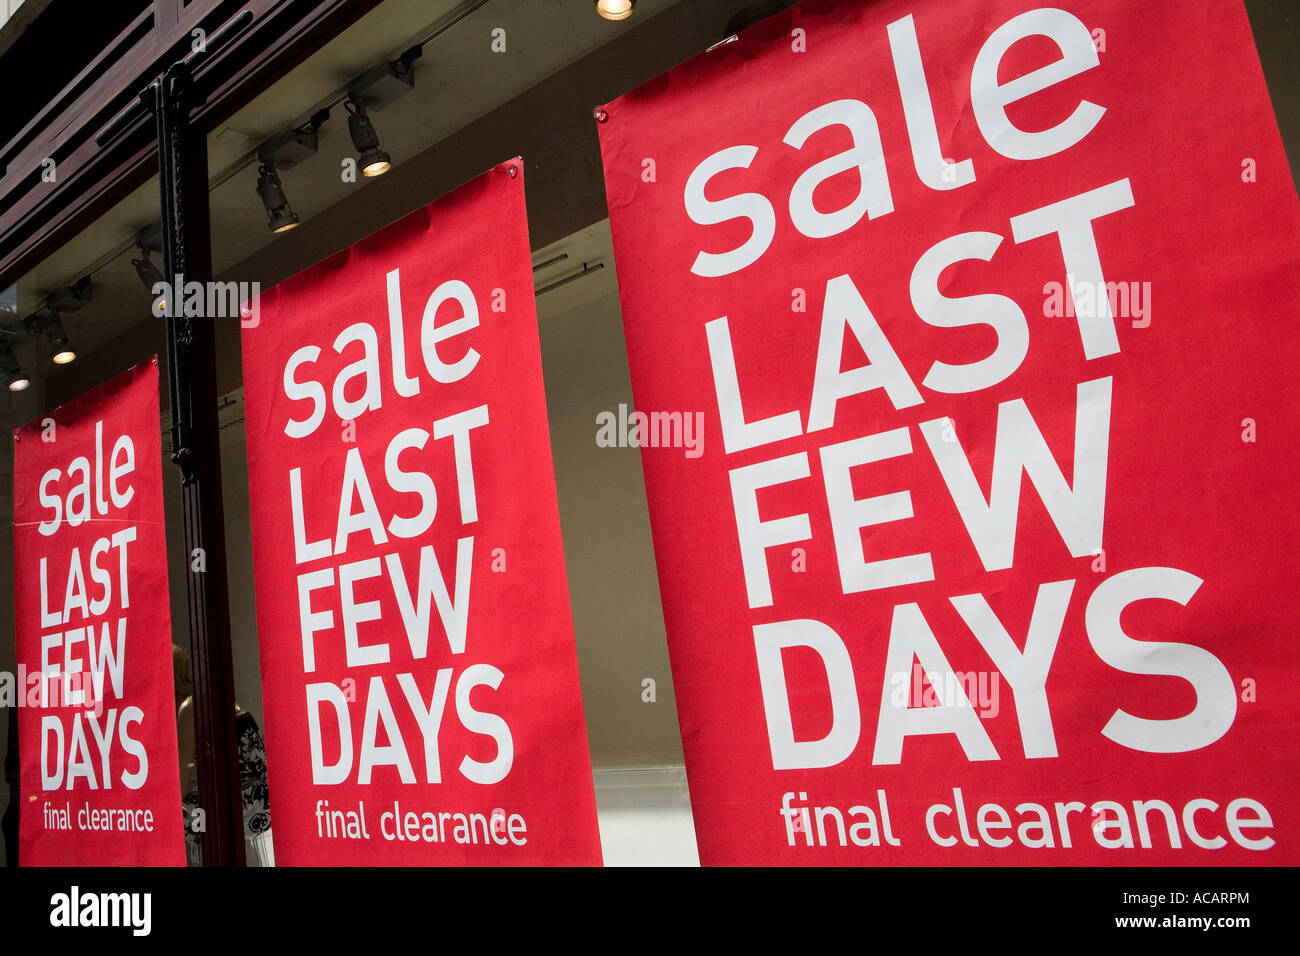 sale-last-few-days-signs-hanging-in-shop-window-ACARPM.jpg